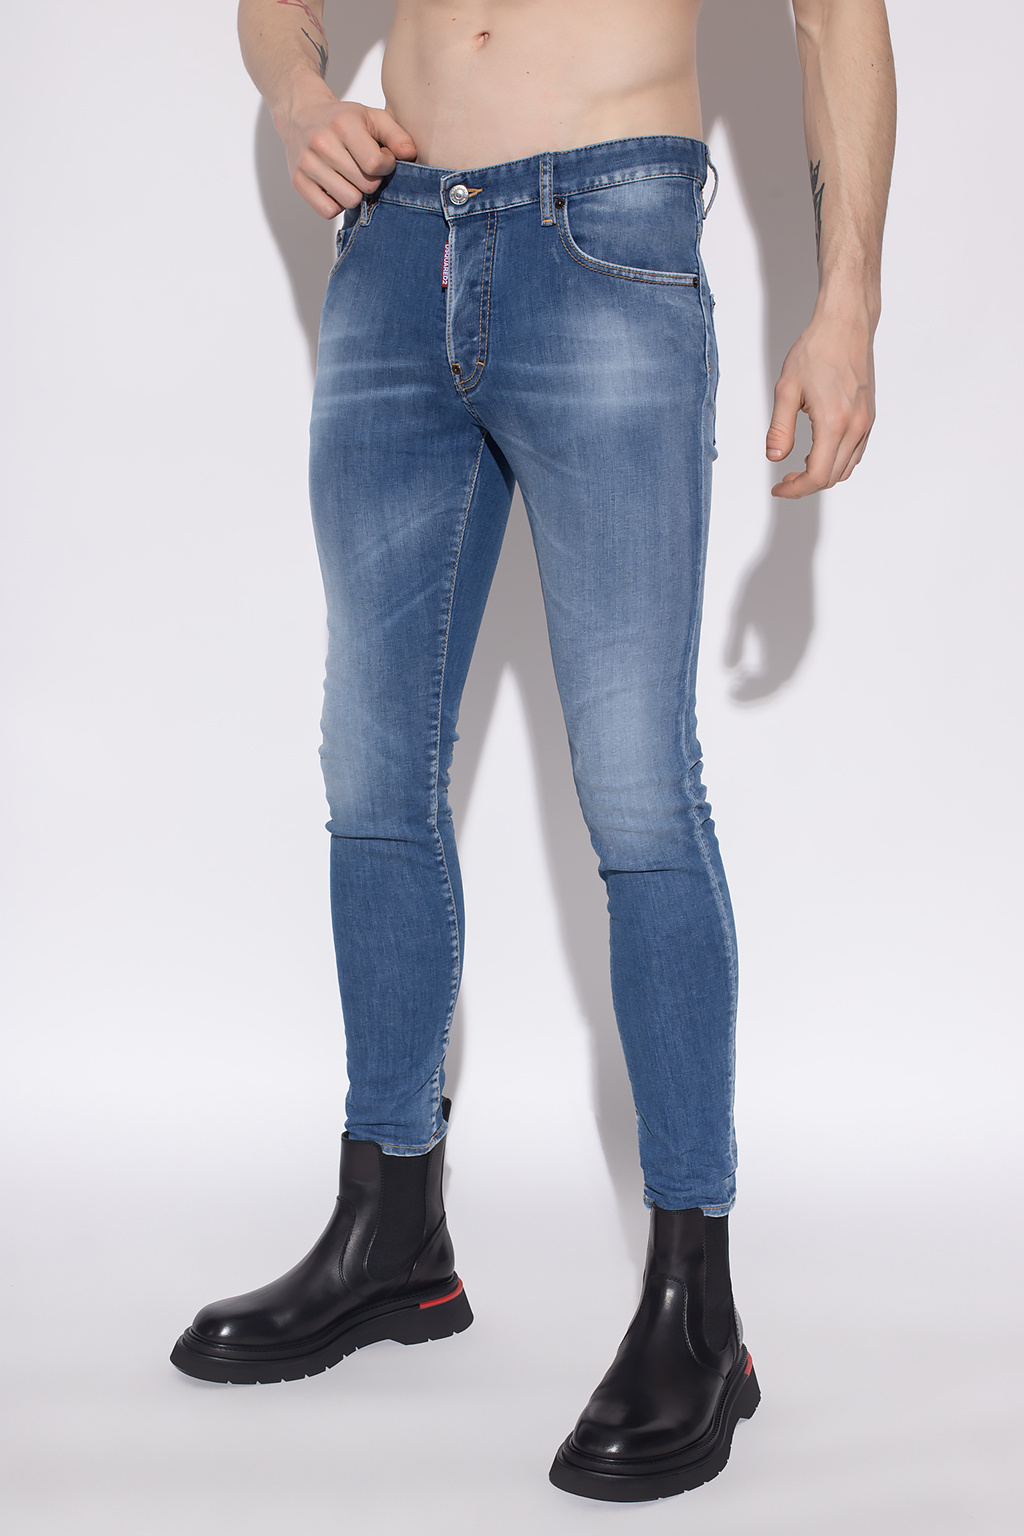 Dsquared2 'Super Twinky' jeans | Men's Clothing | Vitkac